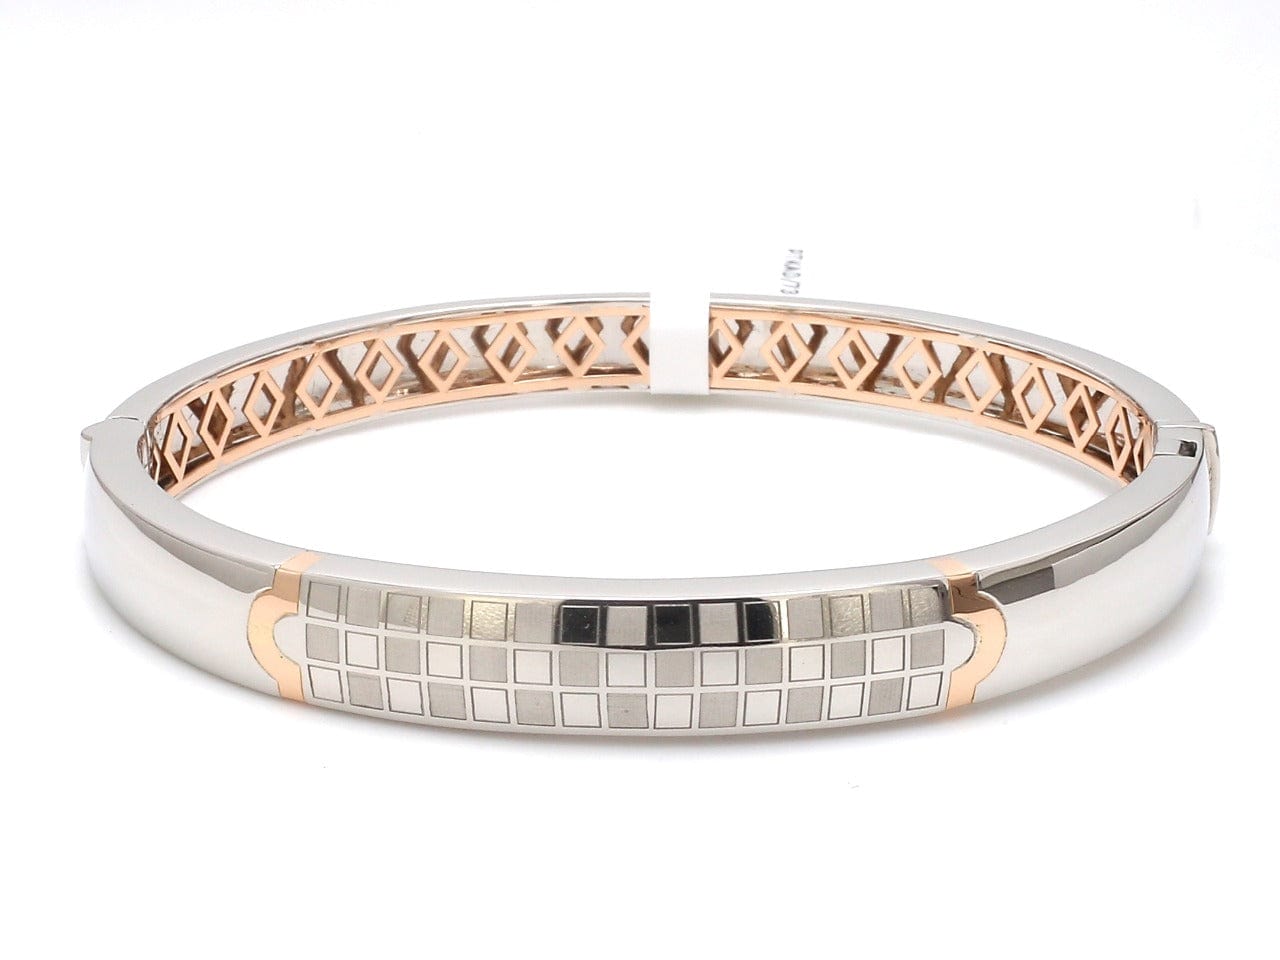 Buy Mens Diamond Bracelet Designs Online With Offers  Melorra